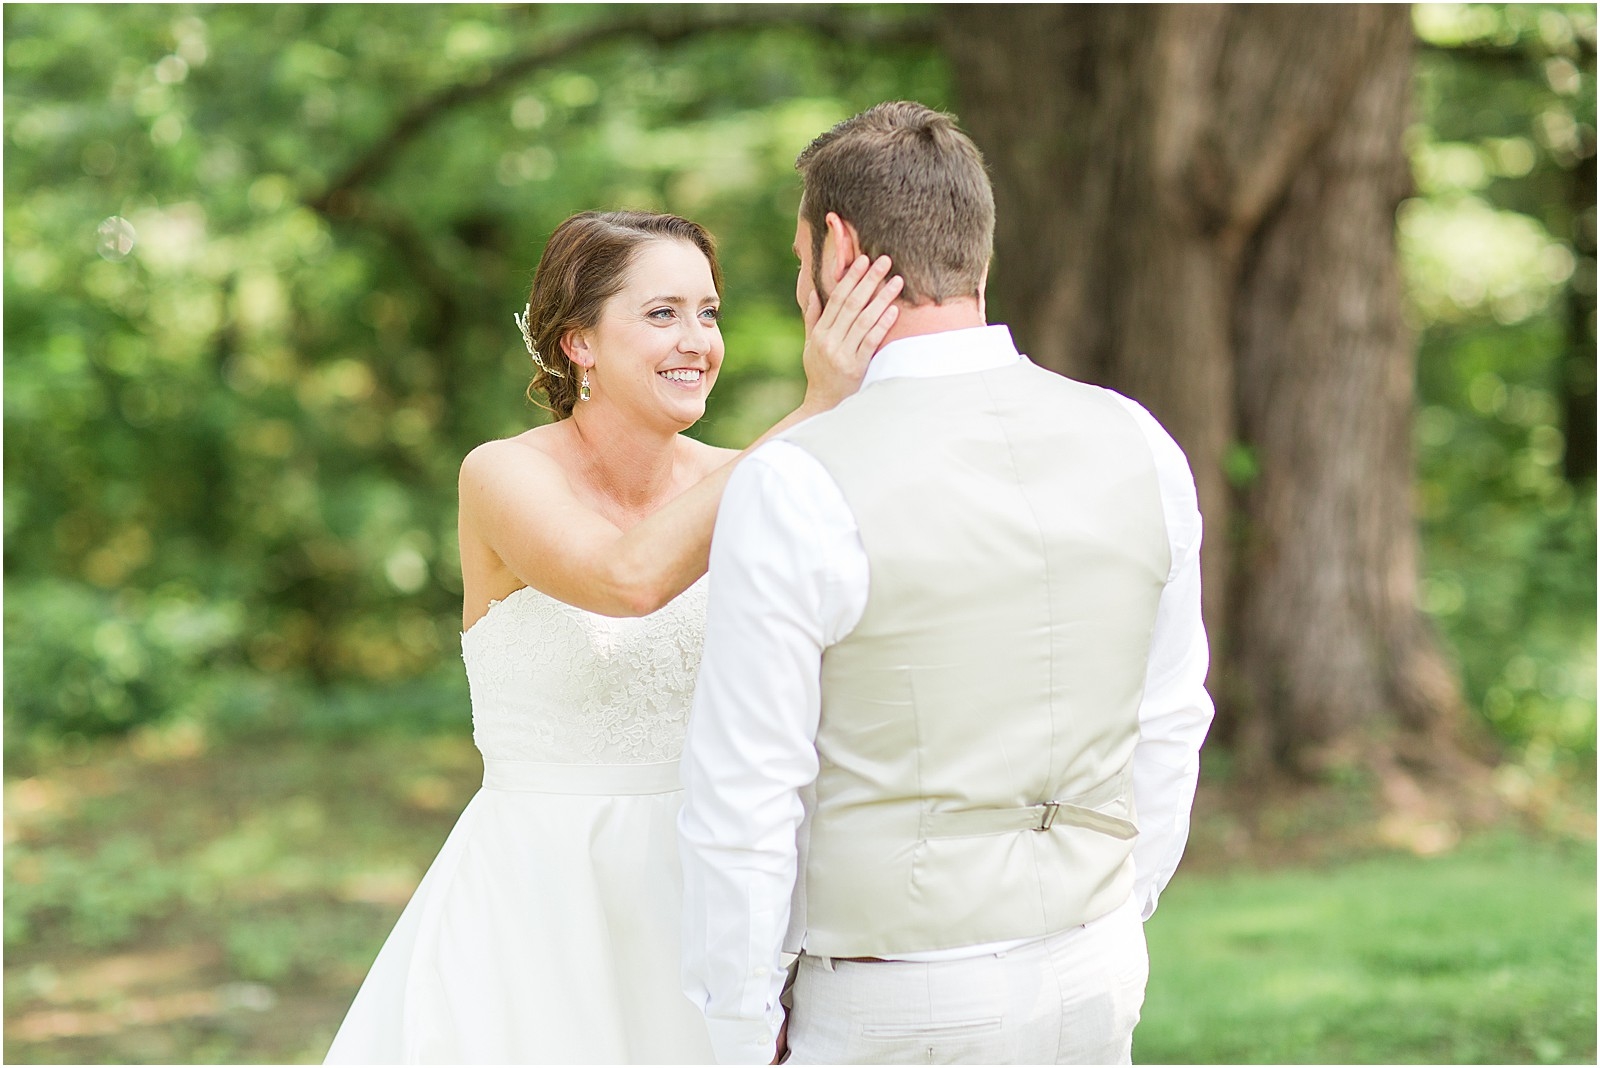 A Evansville Indiana Backyard Wedding | Bailey and Ben 026.jpg